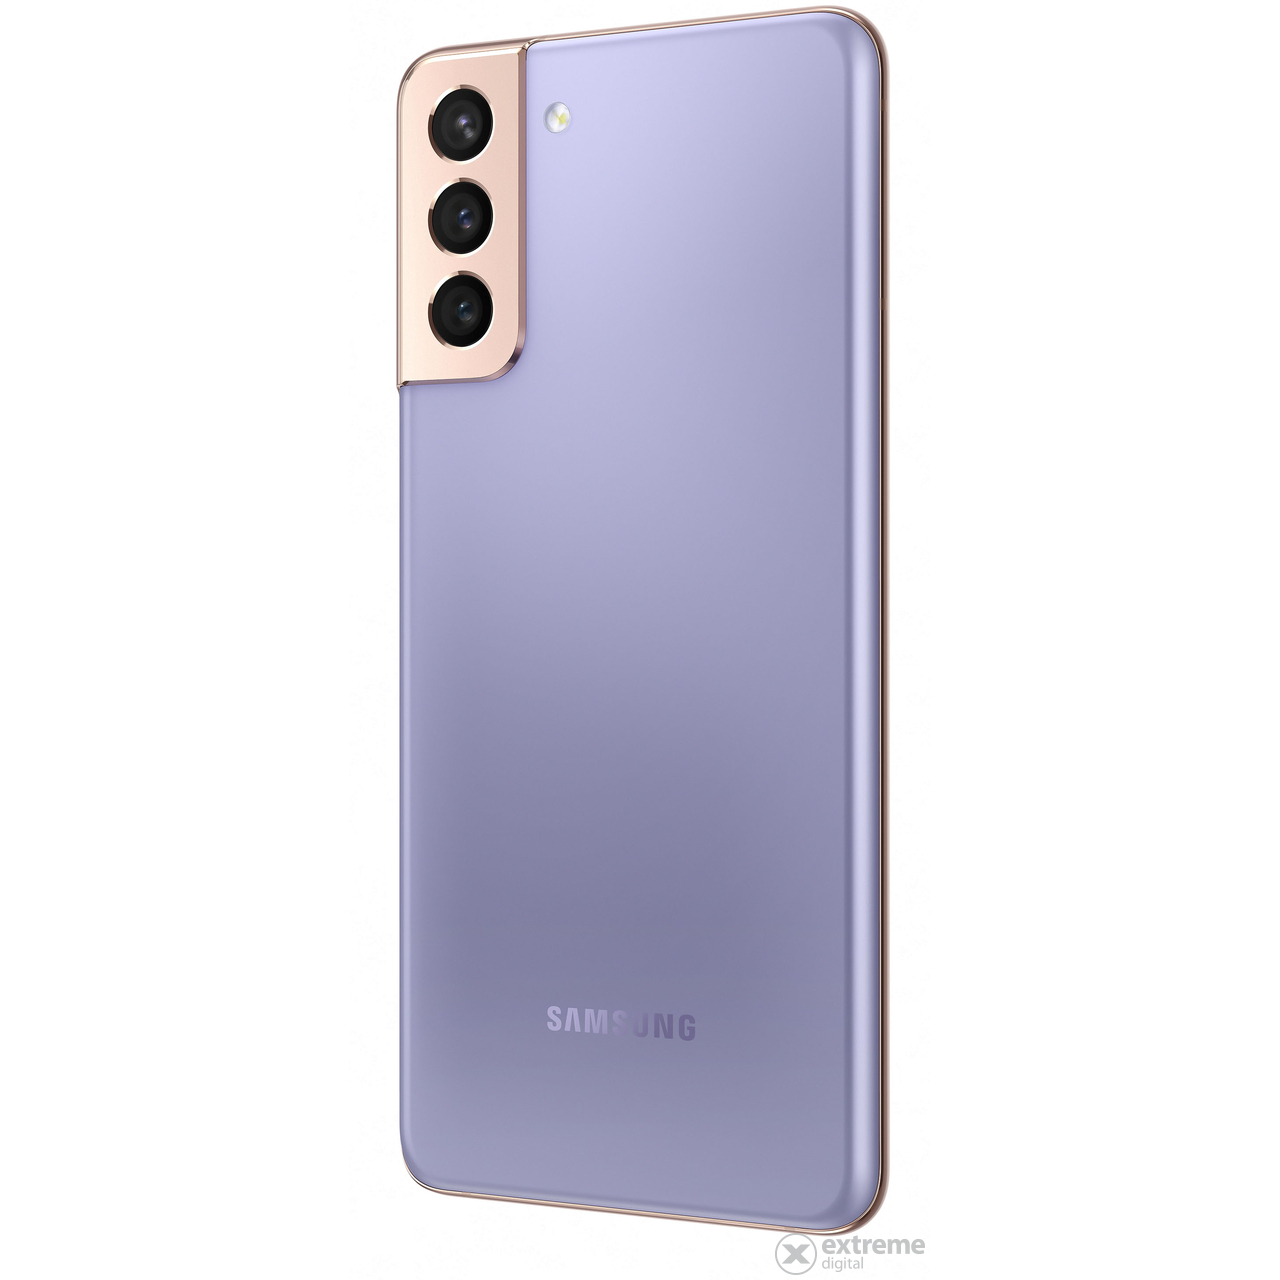 Samsung Galaxy S21+ 5G 8GB/128GB Dual SIM (SM-G996) pametni telefon, Fantom ljubičasta